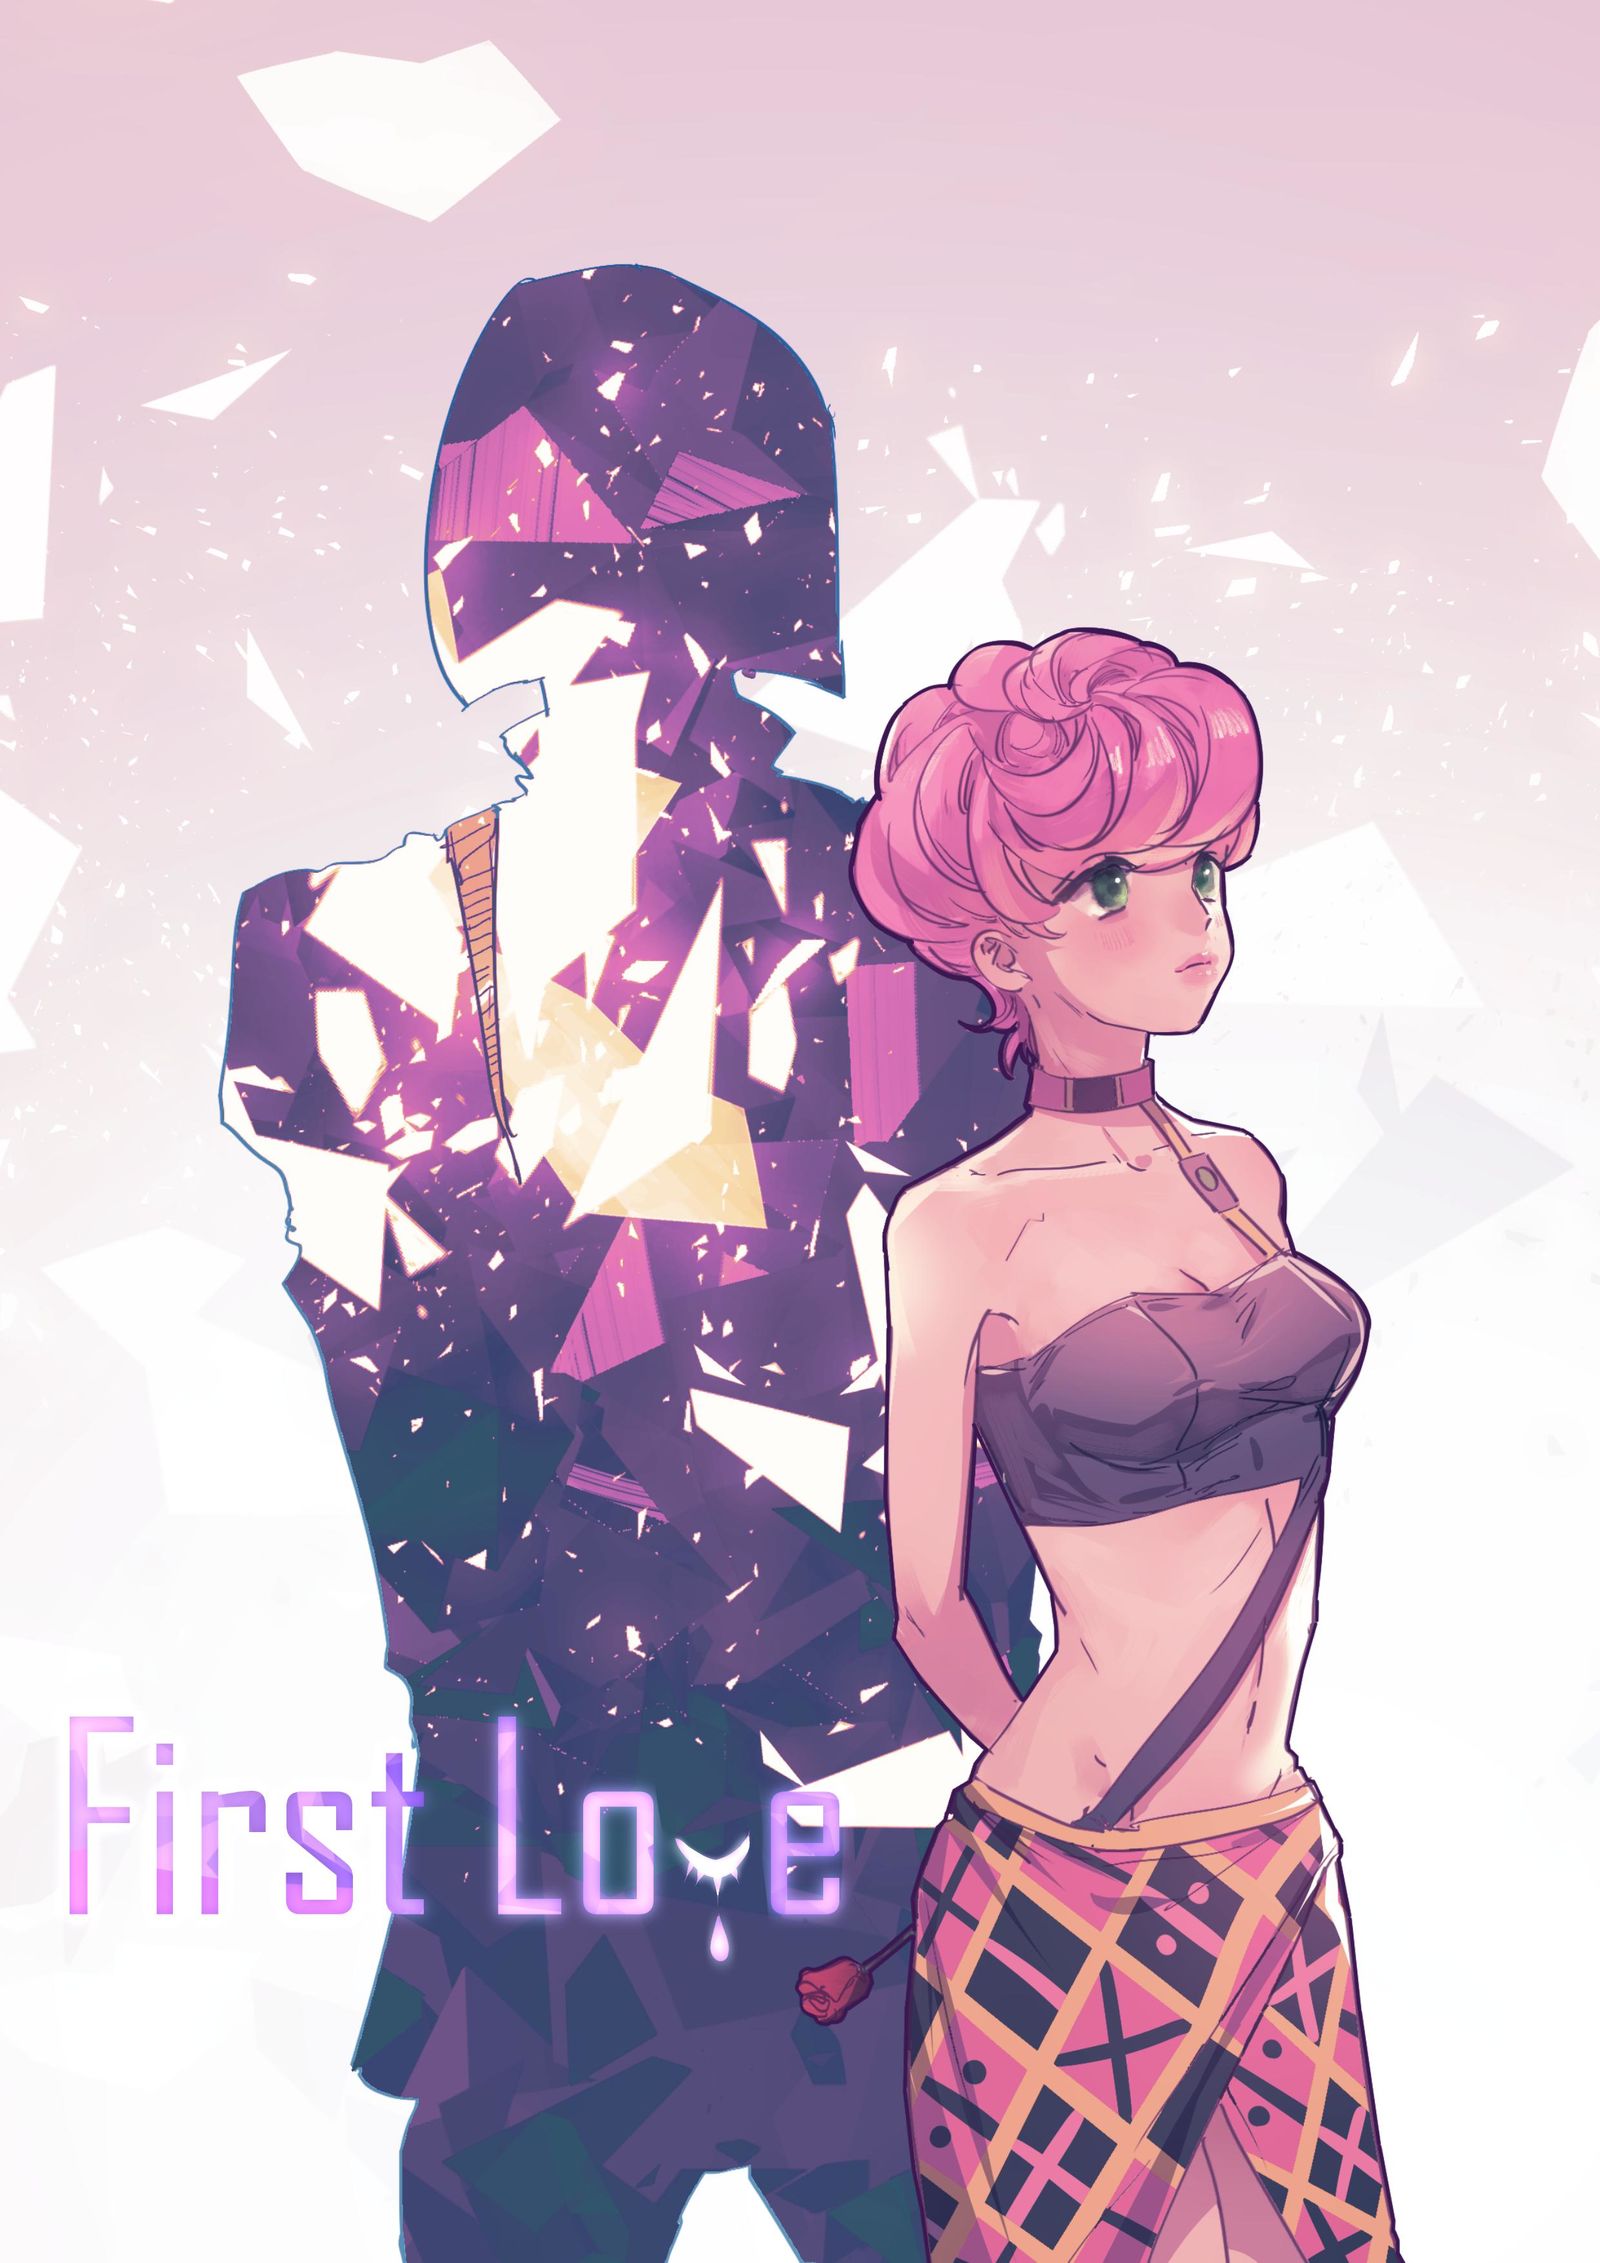 First love插画图片壁纸